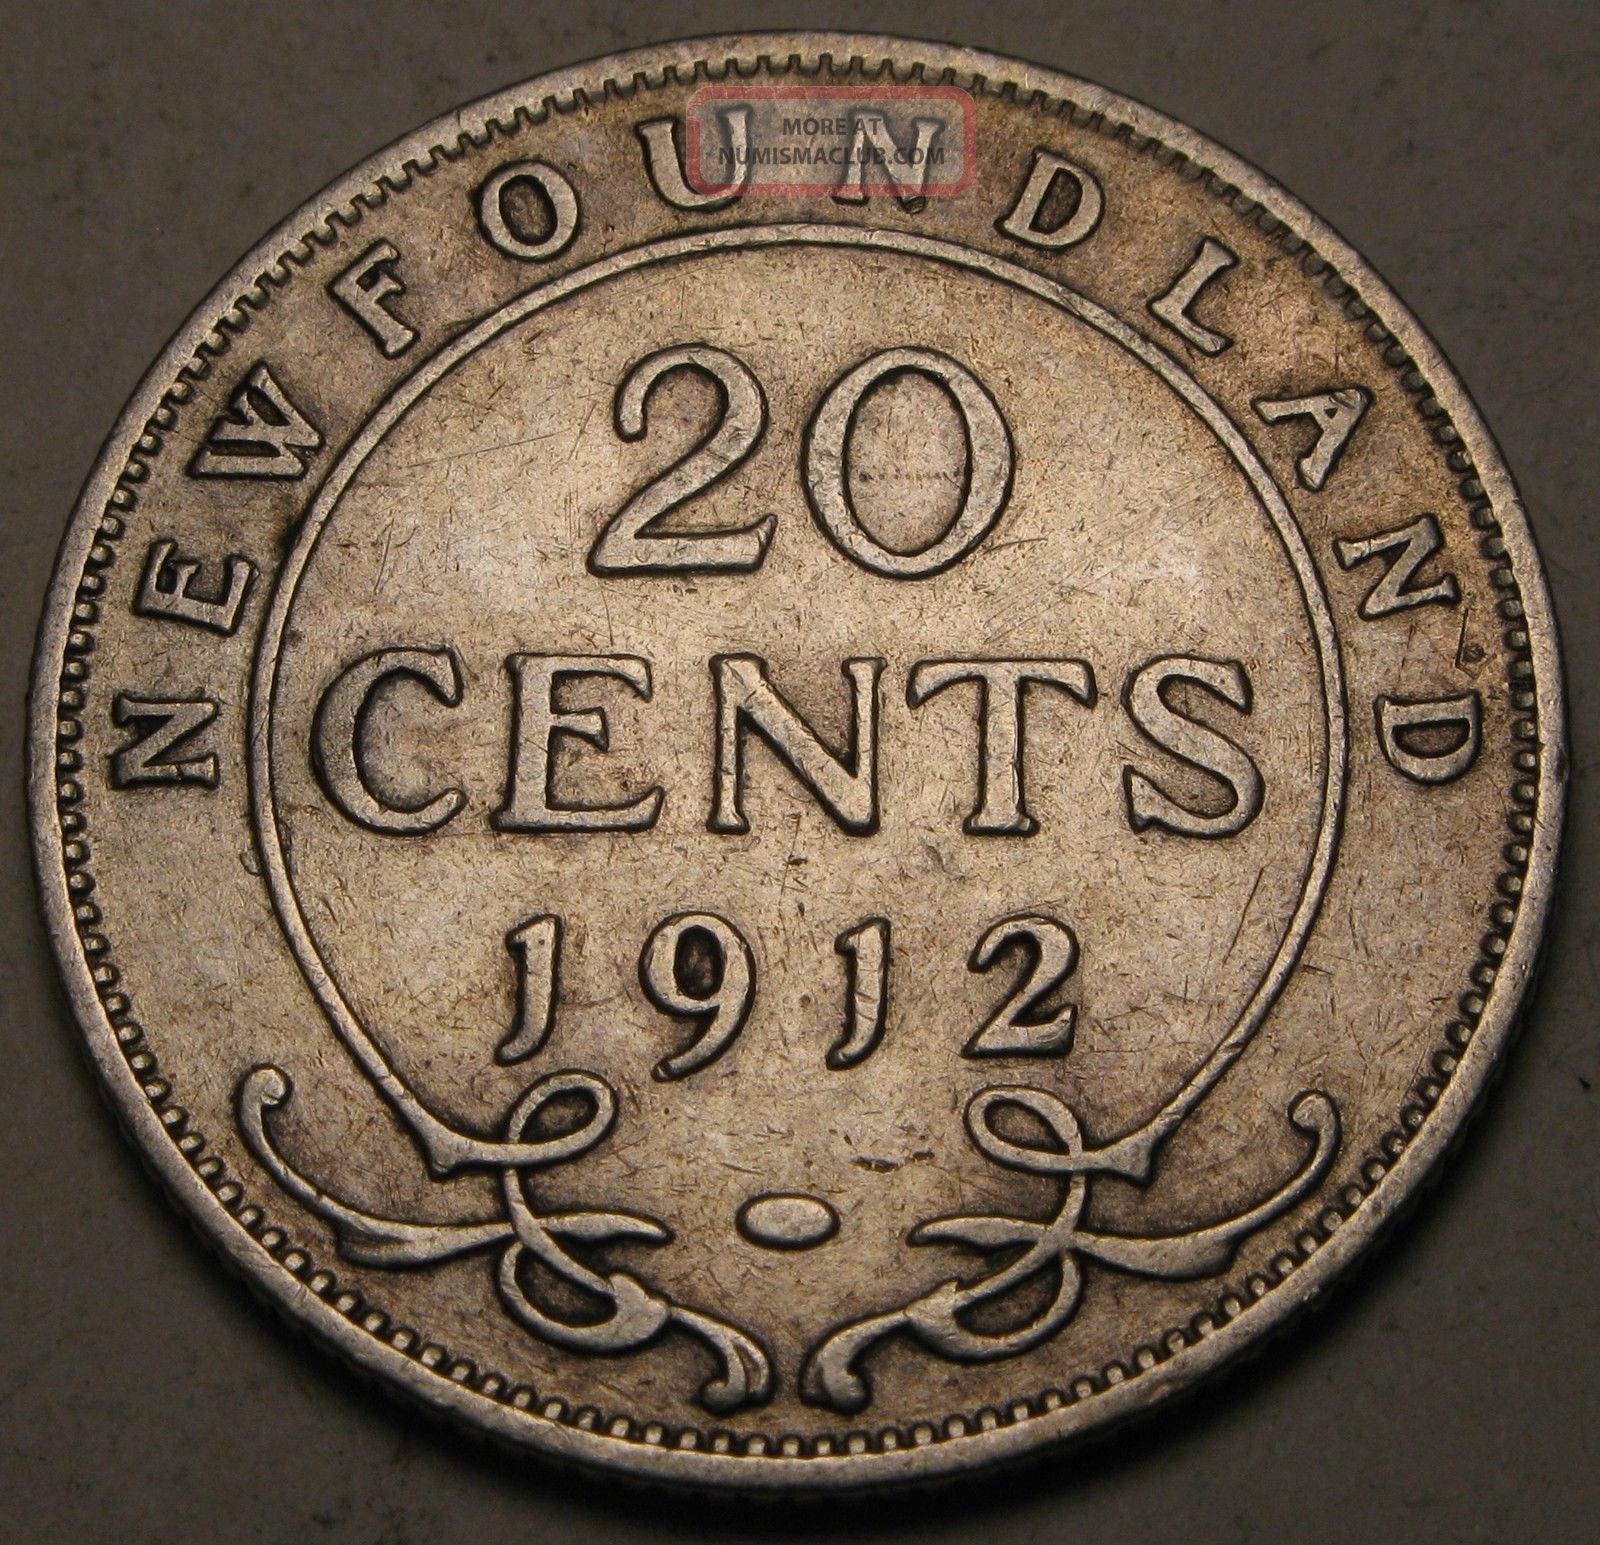 Canada - Foundland 20 Cents 1912 - Silver - George V.  1500 Coins: Canada photo